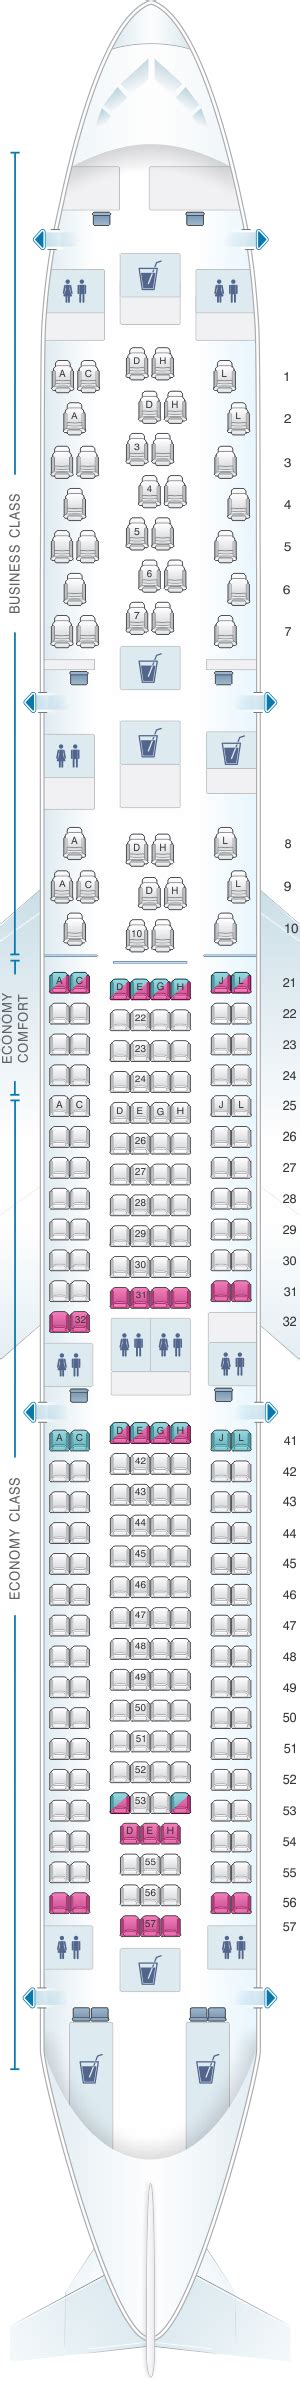 Finnair Airbus A Seat Map Updated Find The Best Seat Seatmaps Sexiz Pix